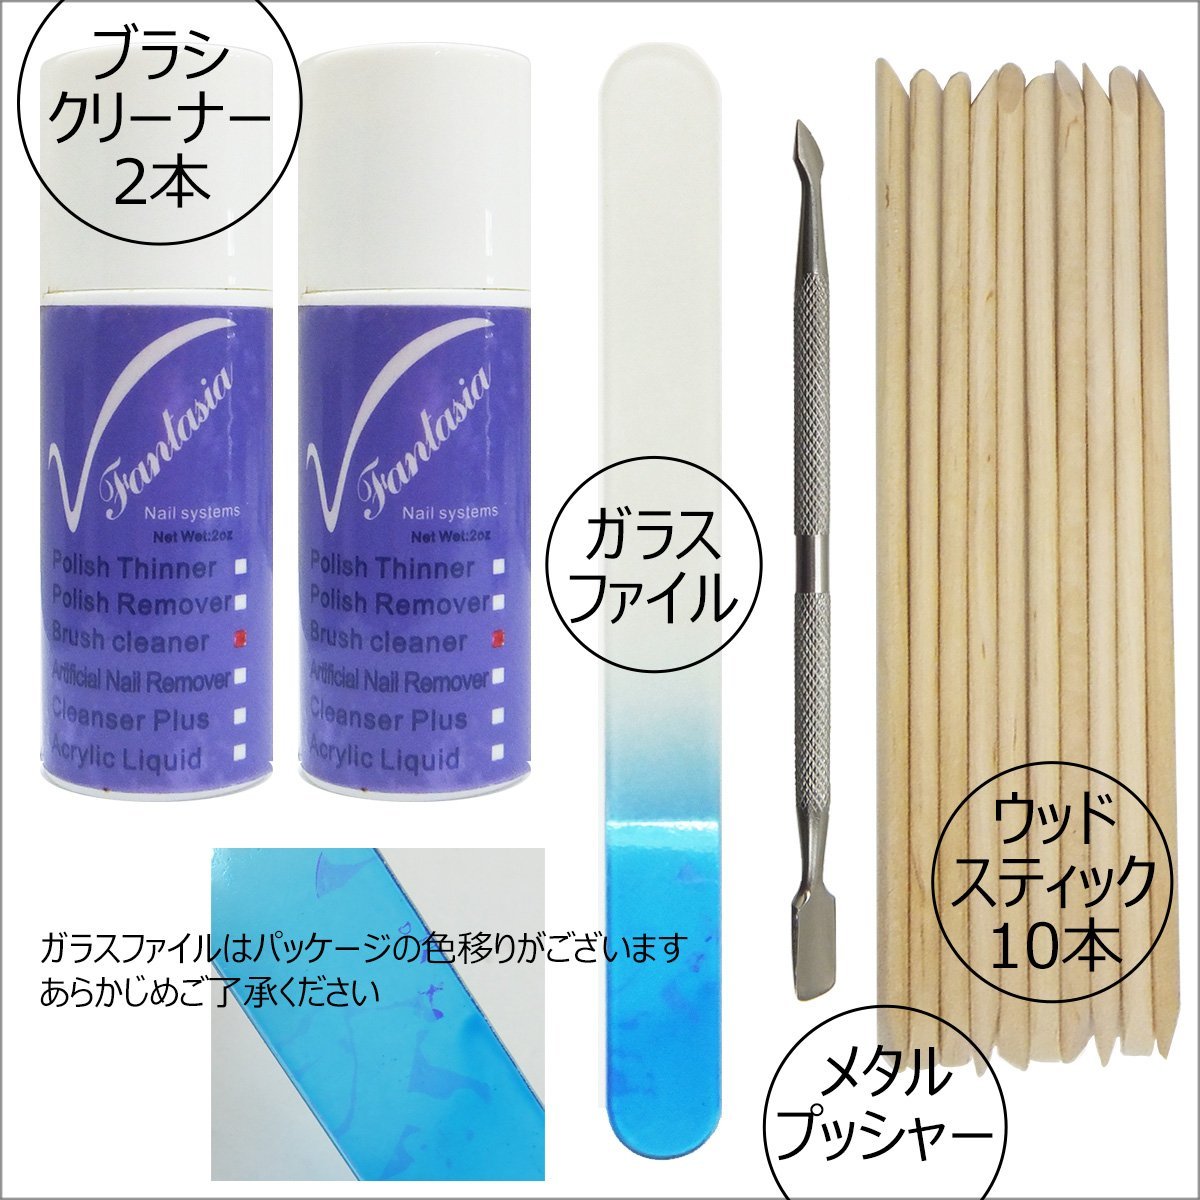  nail art brush set (X) art writing brush 20ps.@ brush cleaner chip wood stick p car - self nails /20